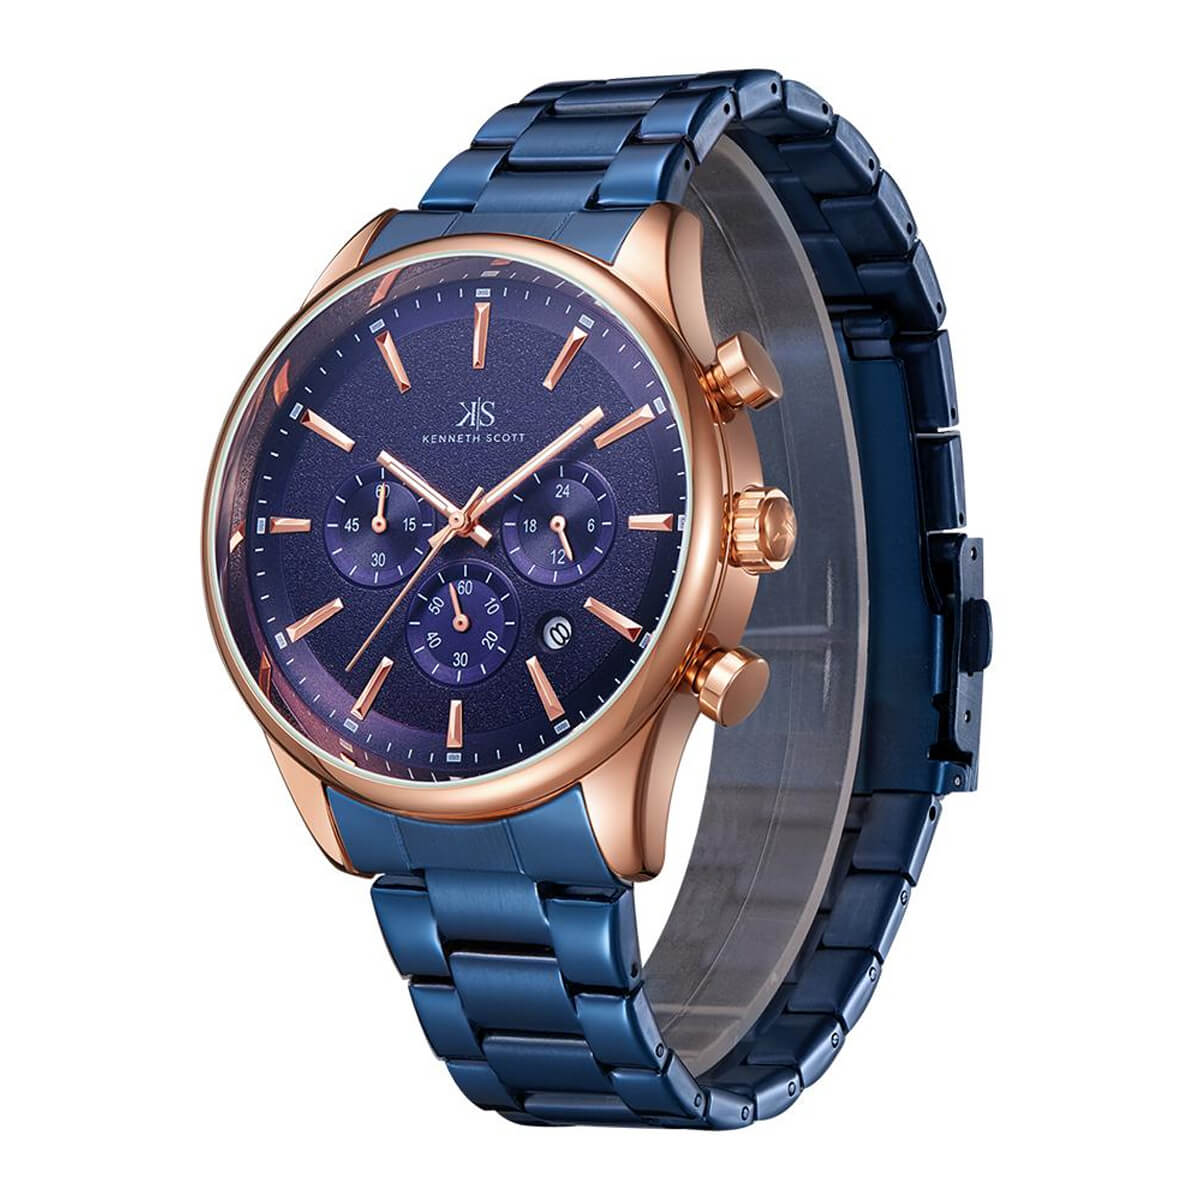 Kenneth Scott Men's Blue Dial Chronograph Watch - K22105-KBNN